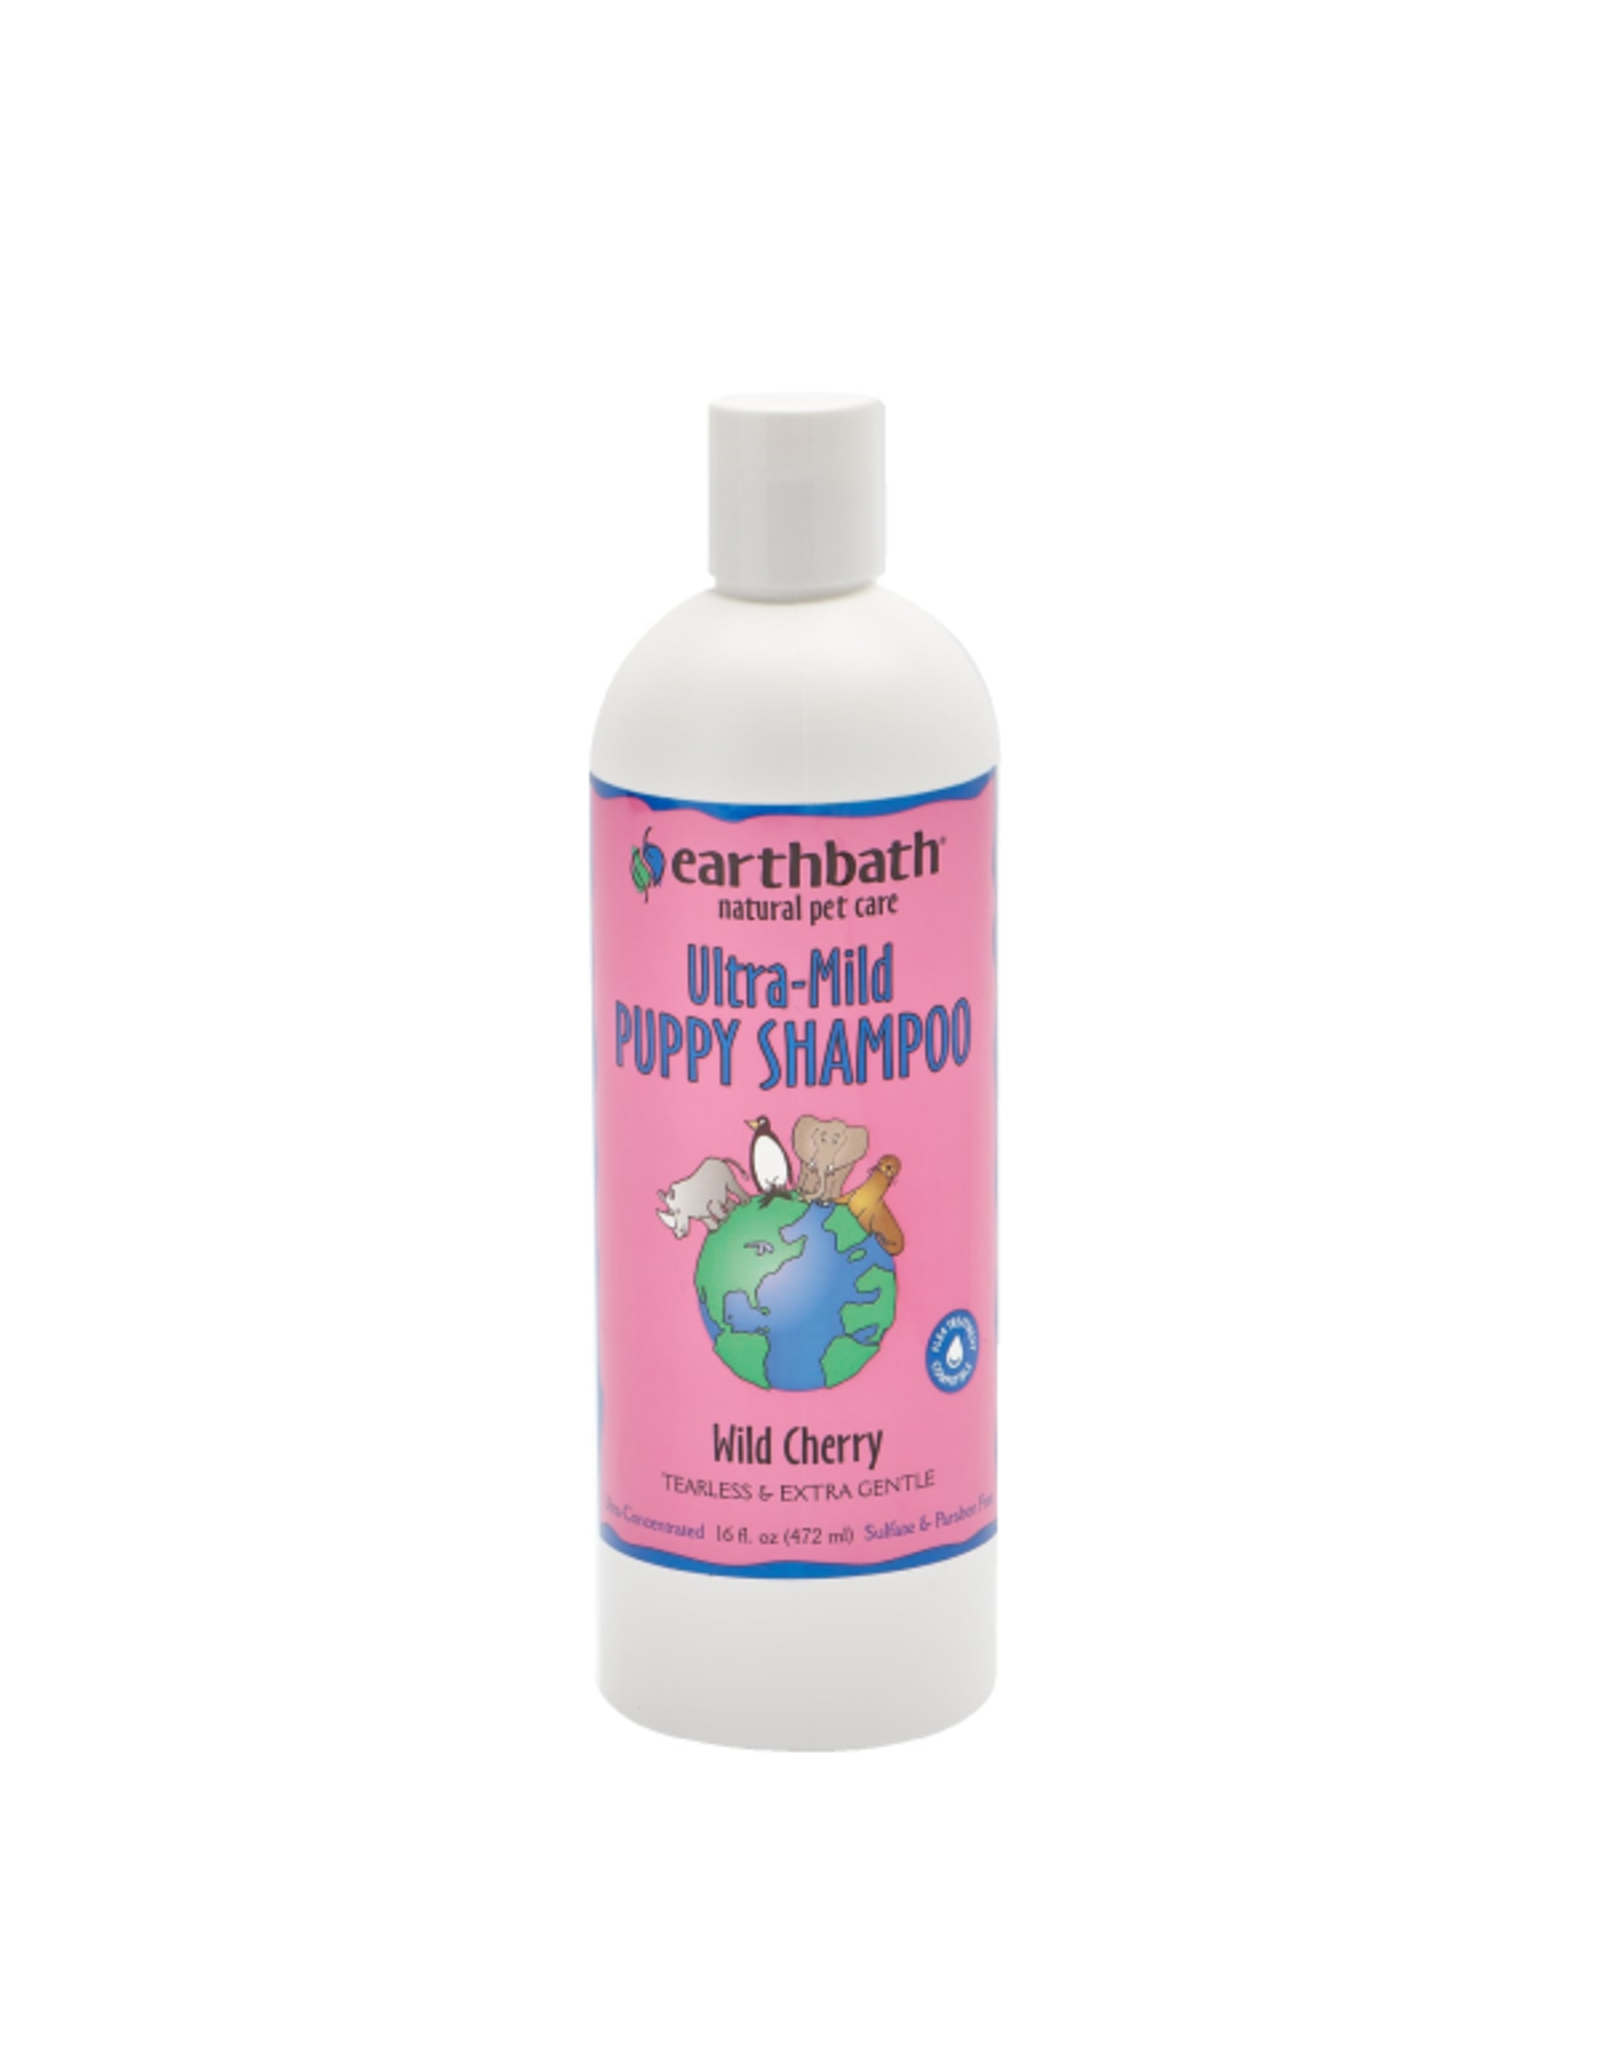 earthbath Ultra-Mild Puppy Shampoo Wild Cherry 16 oz